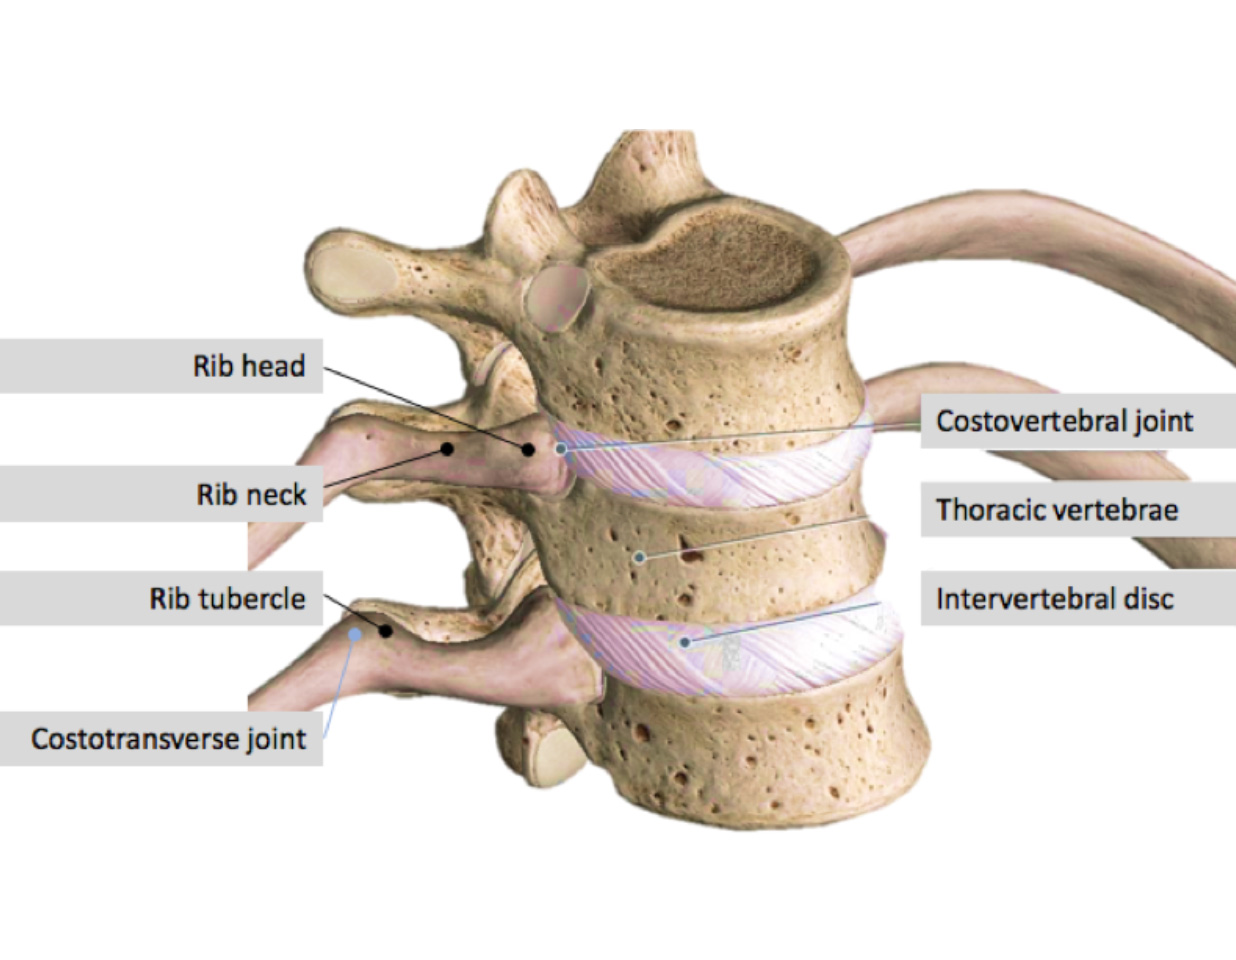 Vertebrae-rib complex showing the costovertebral joint